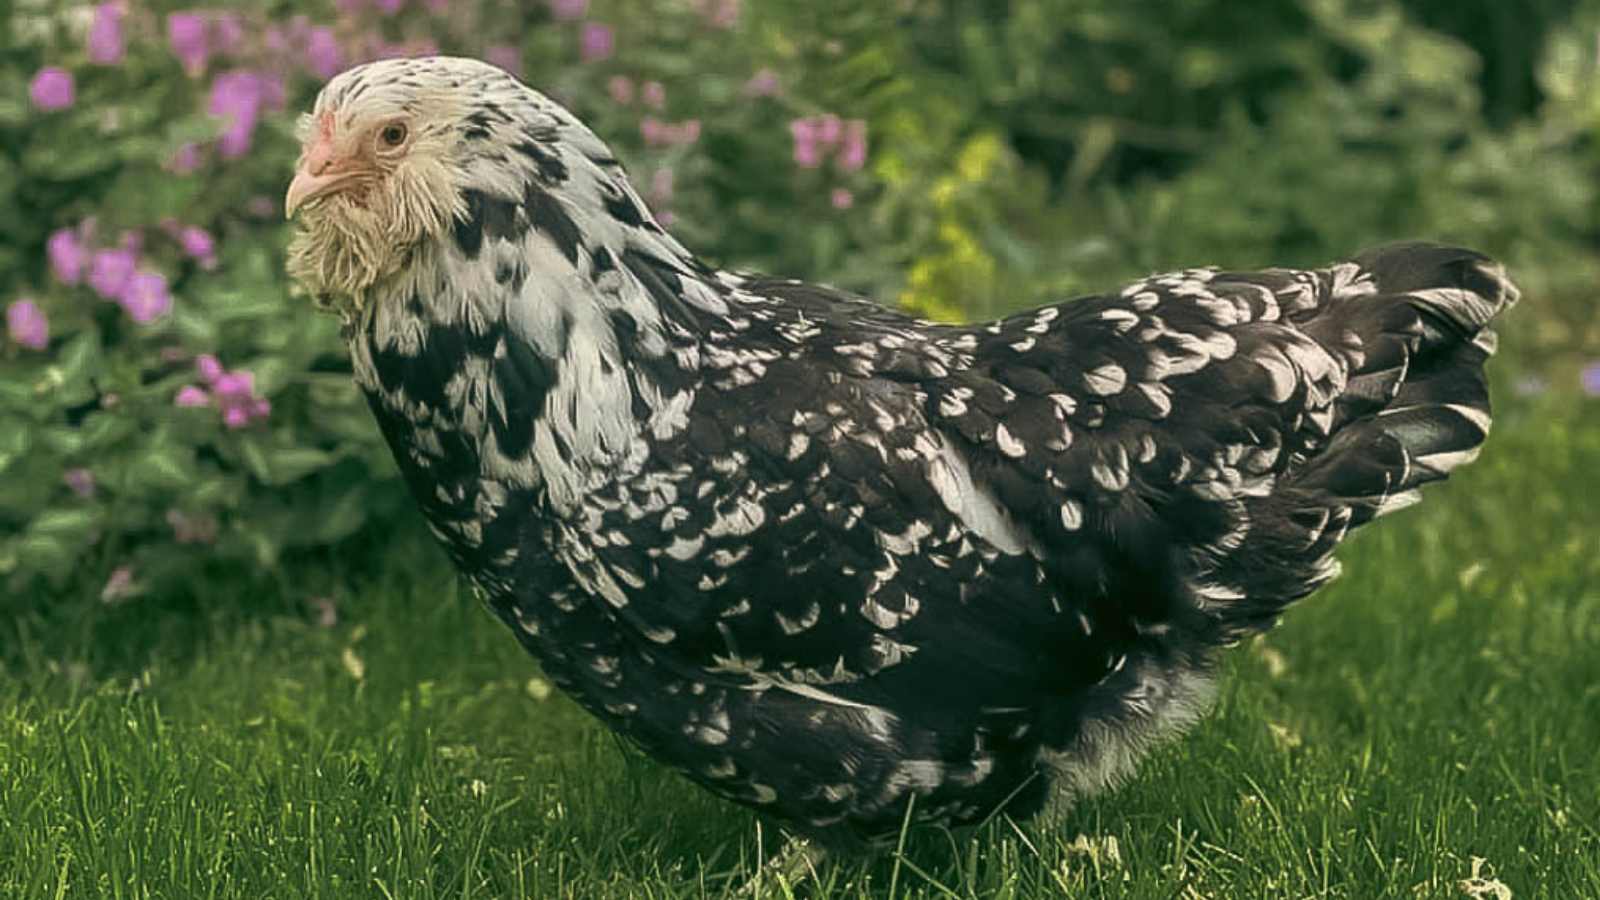 A black and white Ameraucana hen on grass.